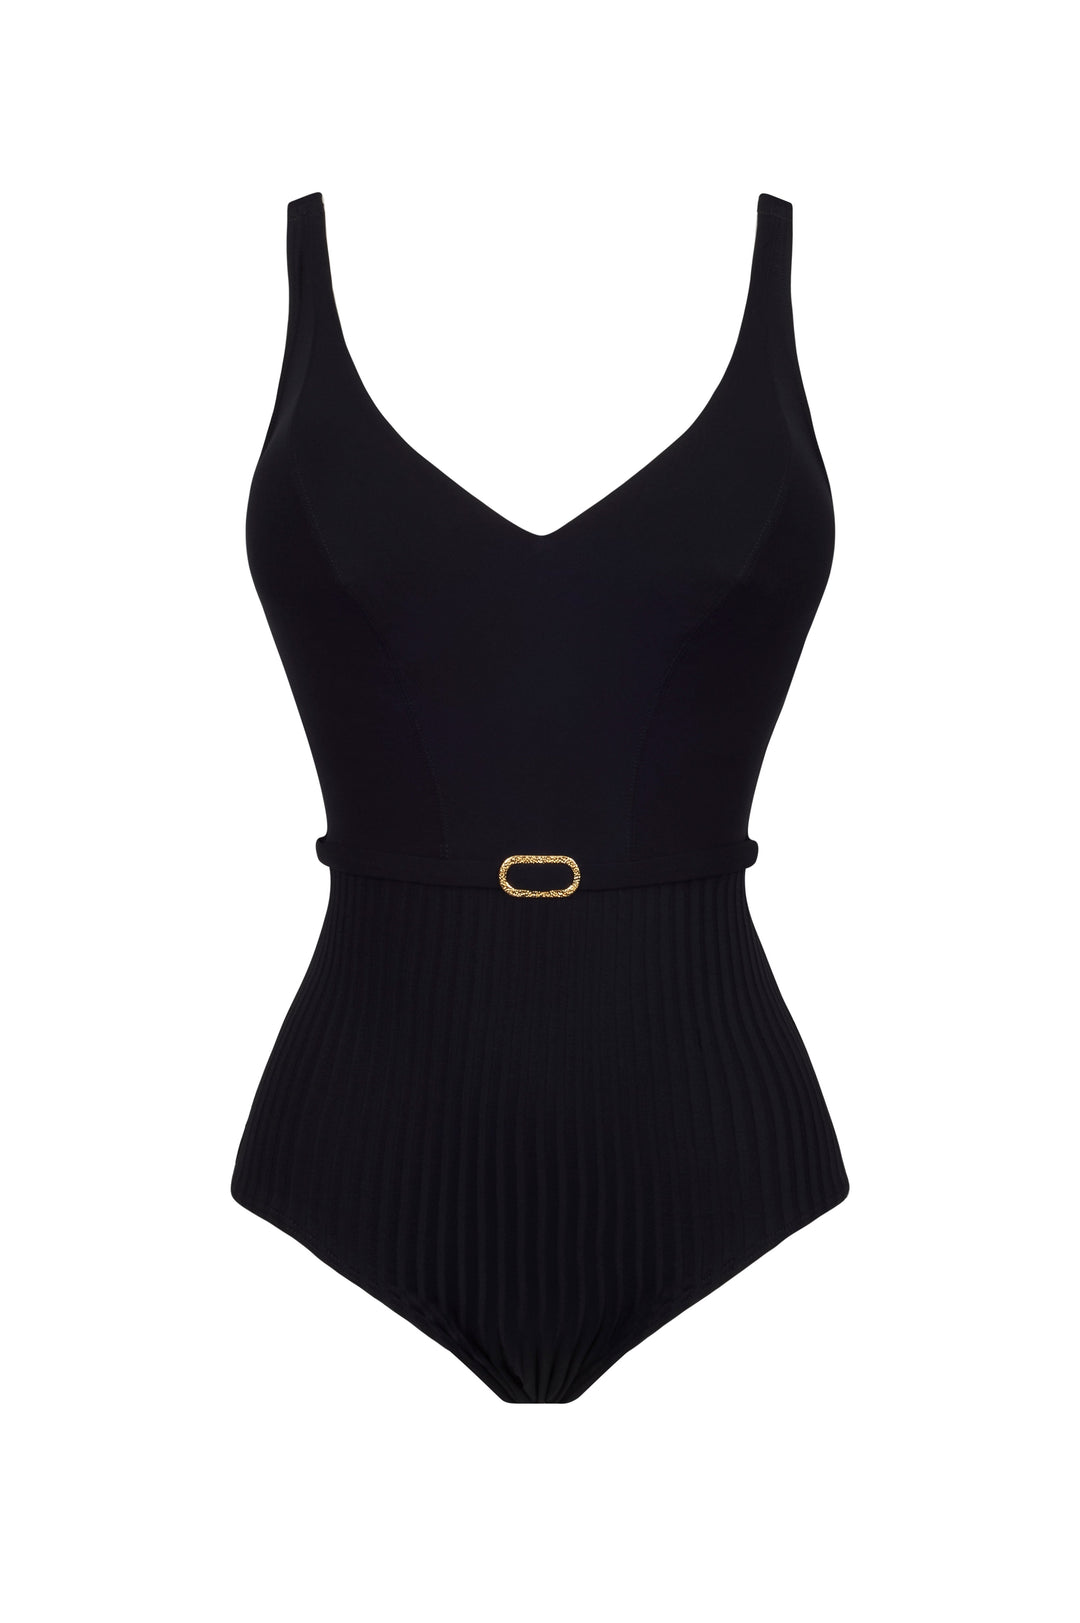 Empreinte - Iconic Bügel-Badeanzug mit V-Ausschnitt Schwarzer Badeanzug mit tiefem Ausschnitt Empreinte Bademode